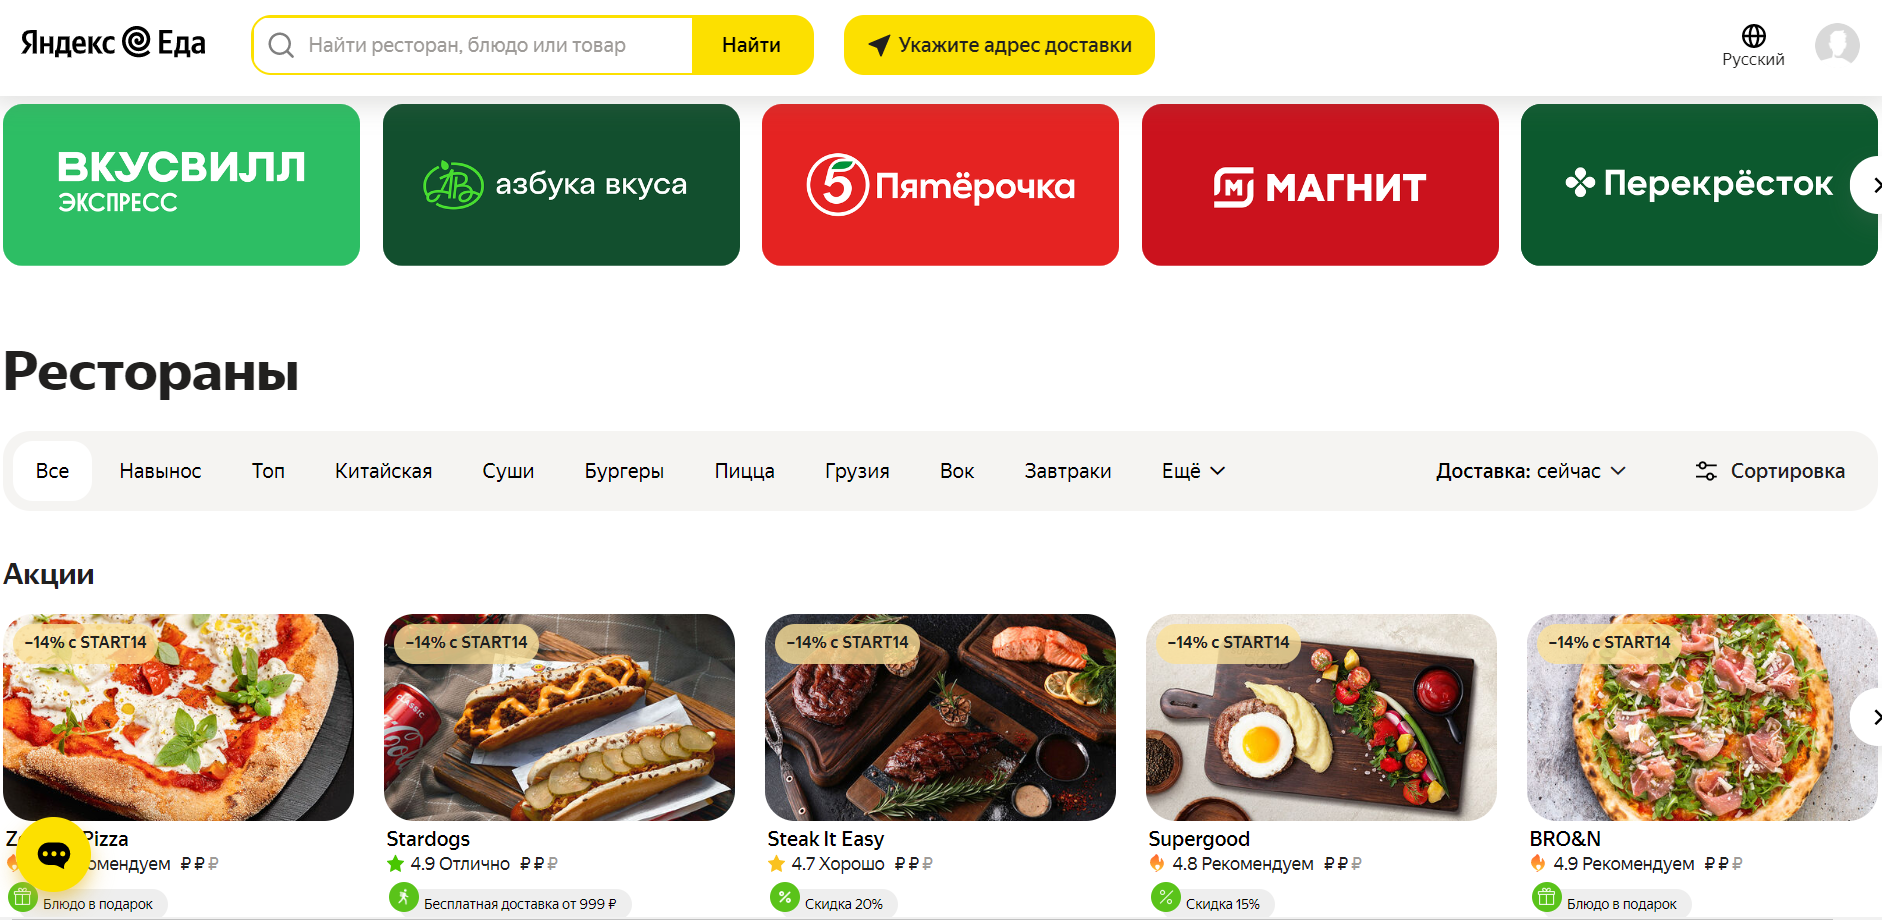 Яндекс.Еда сайт онлайн-сервиса